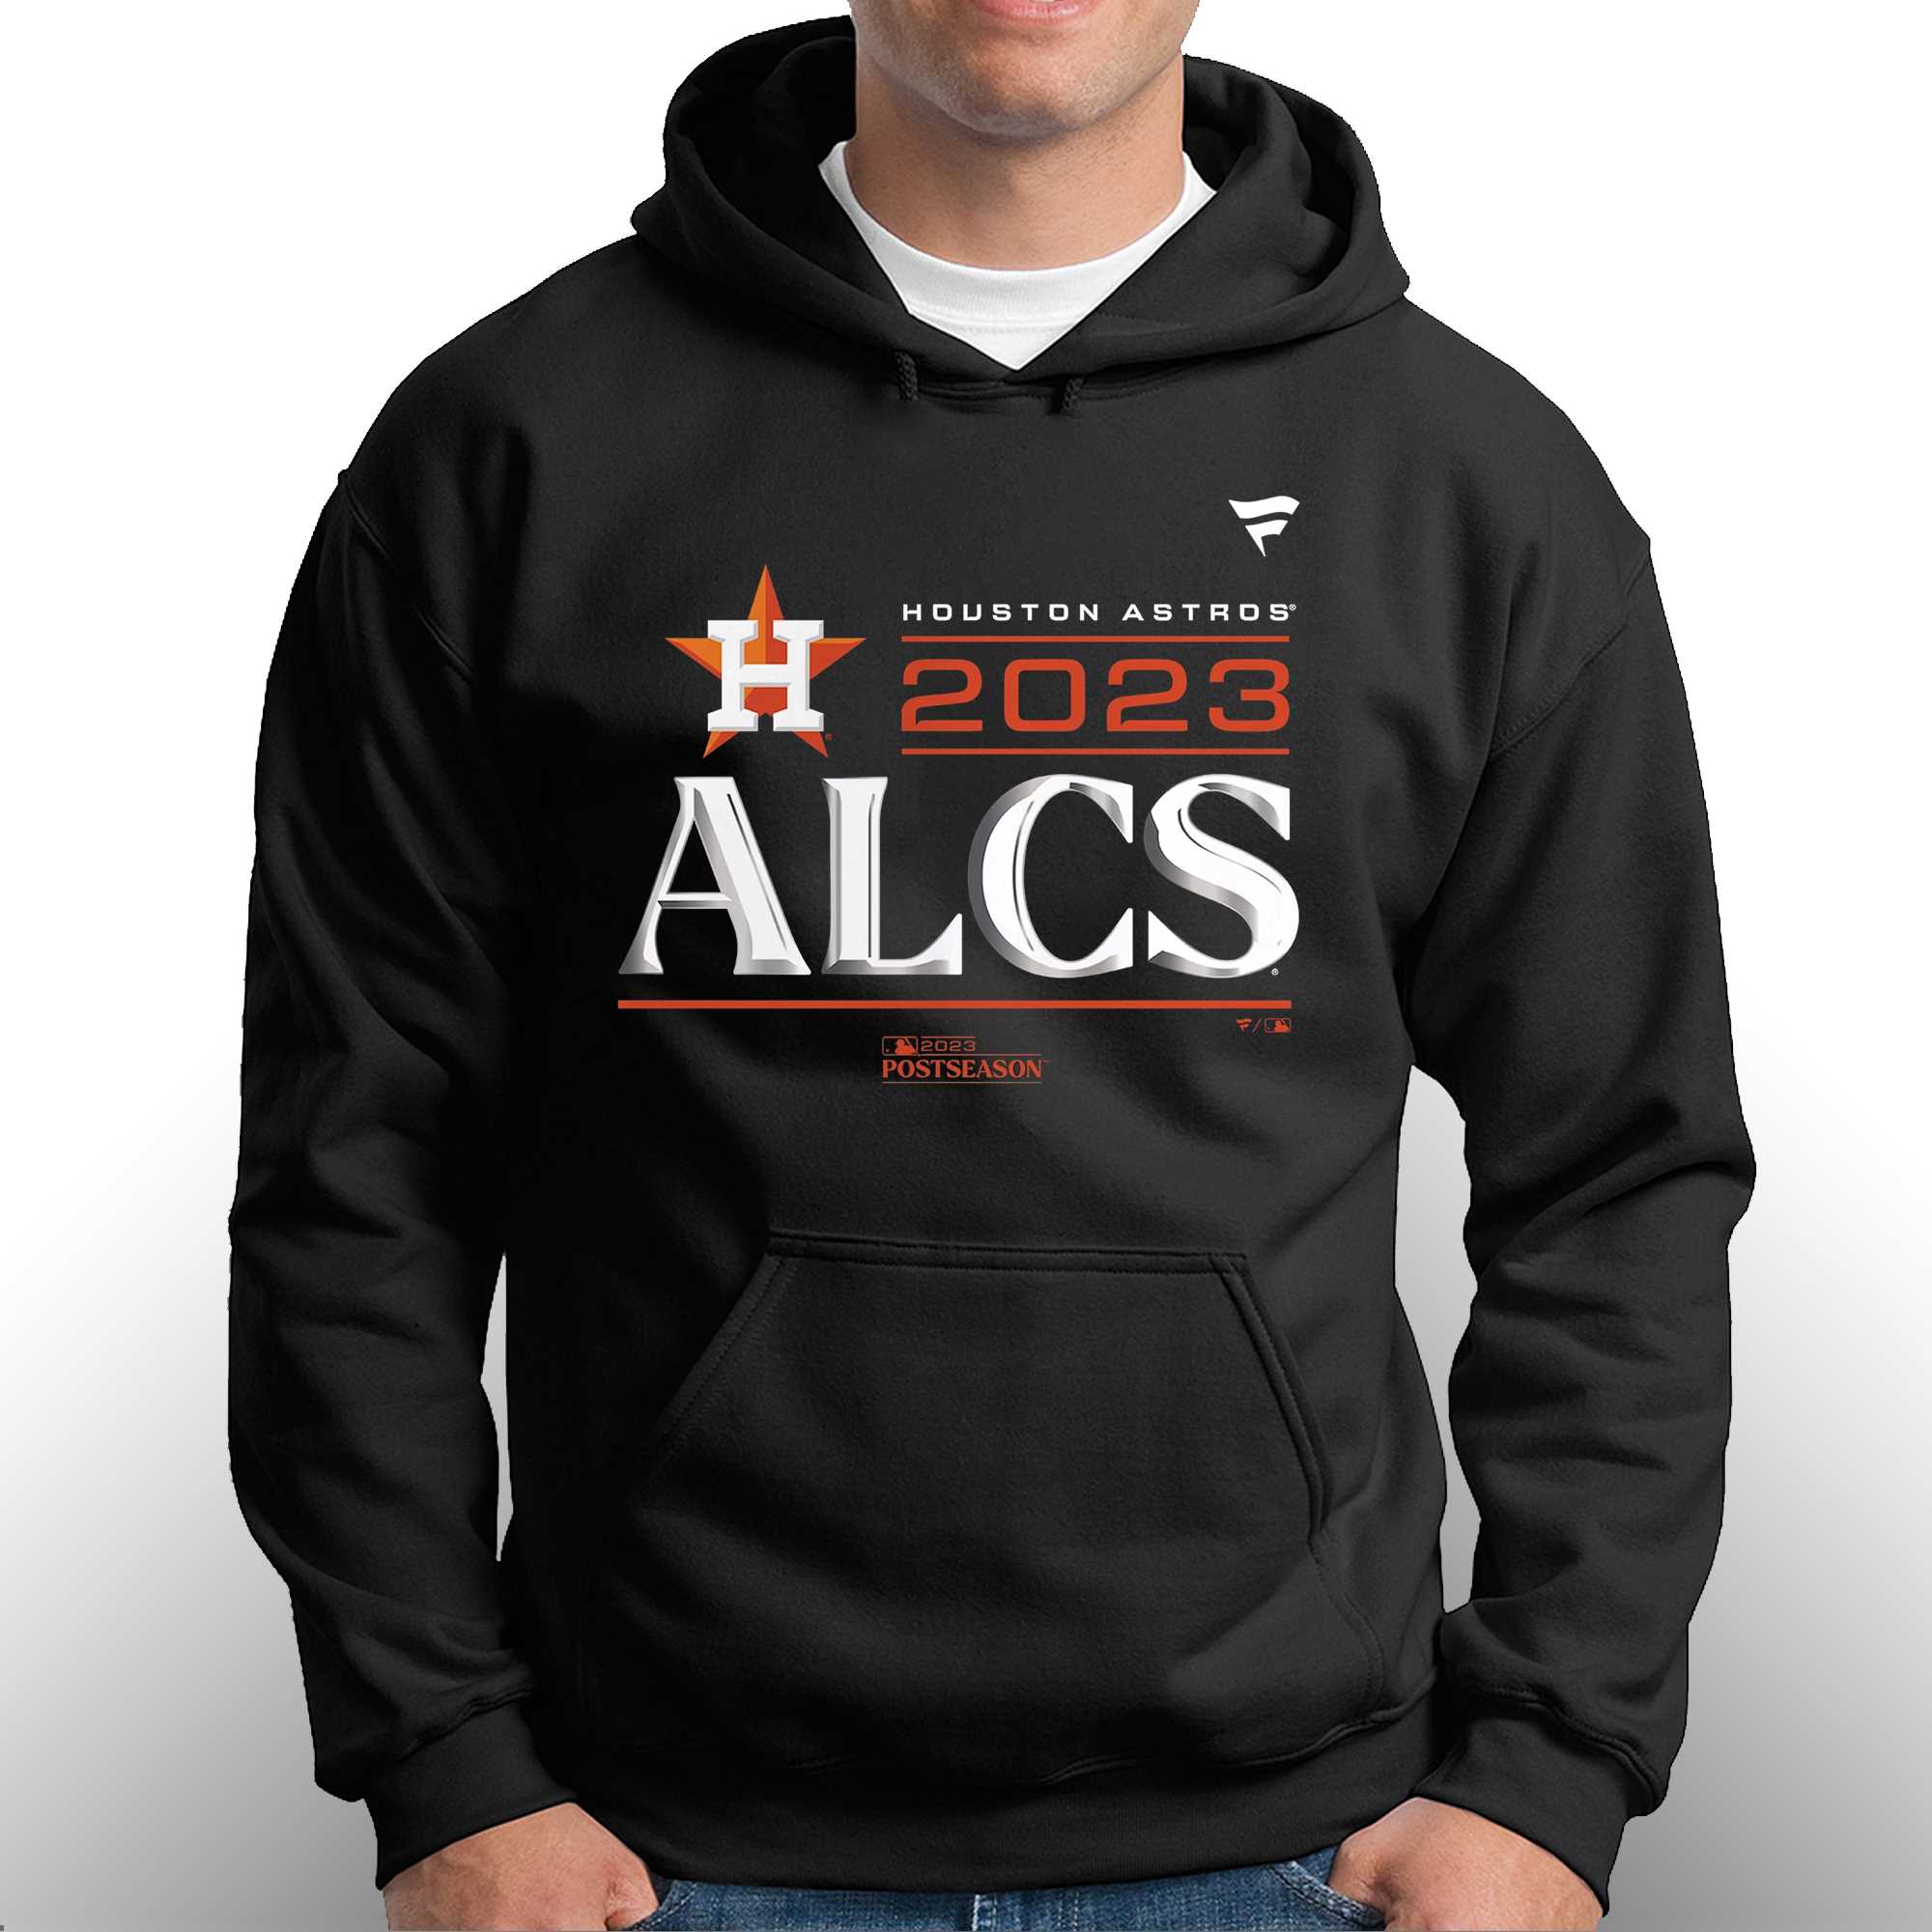 Houston Astros ALCS Division Series 2023 Postseason T Shirt